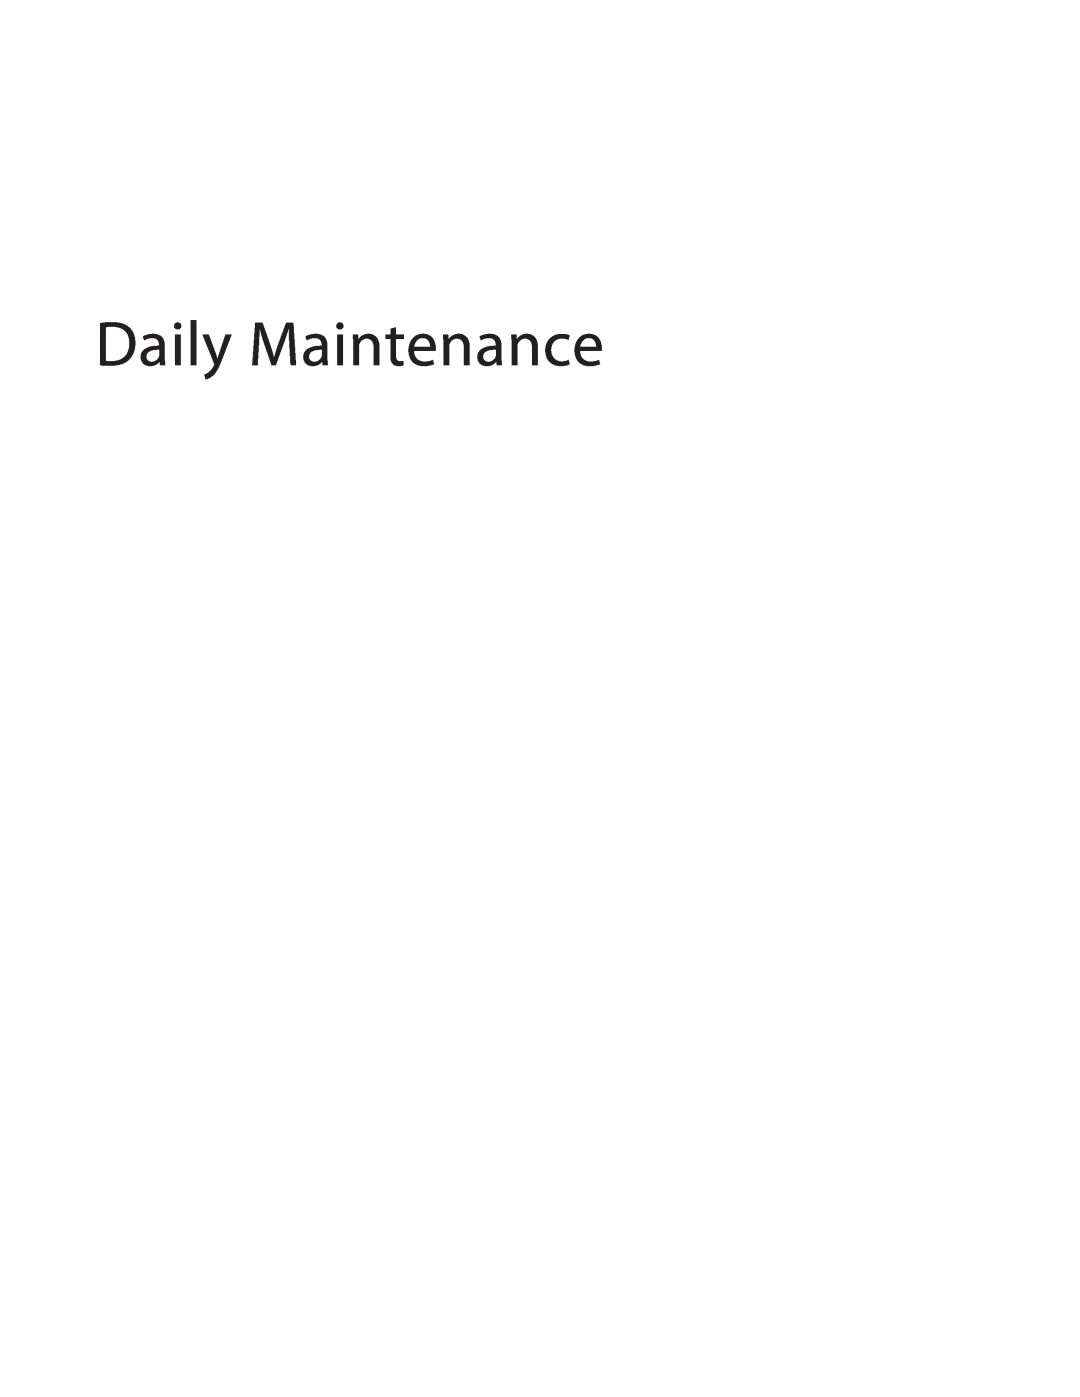 Turbo Chef Technologies i5 service manual Daily Maintenance 